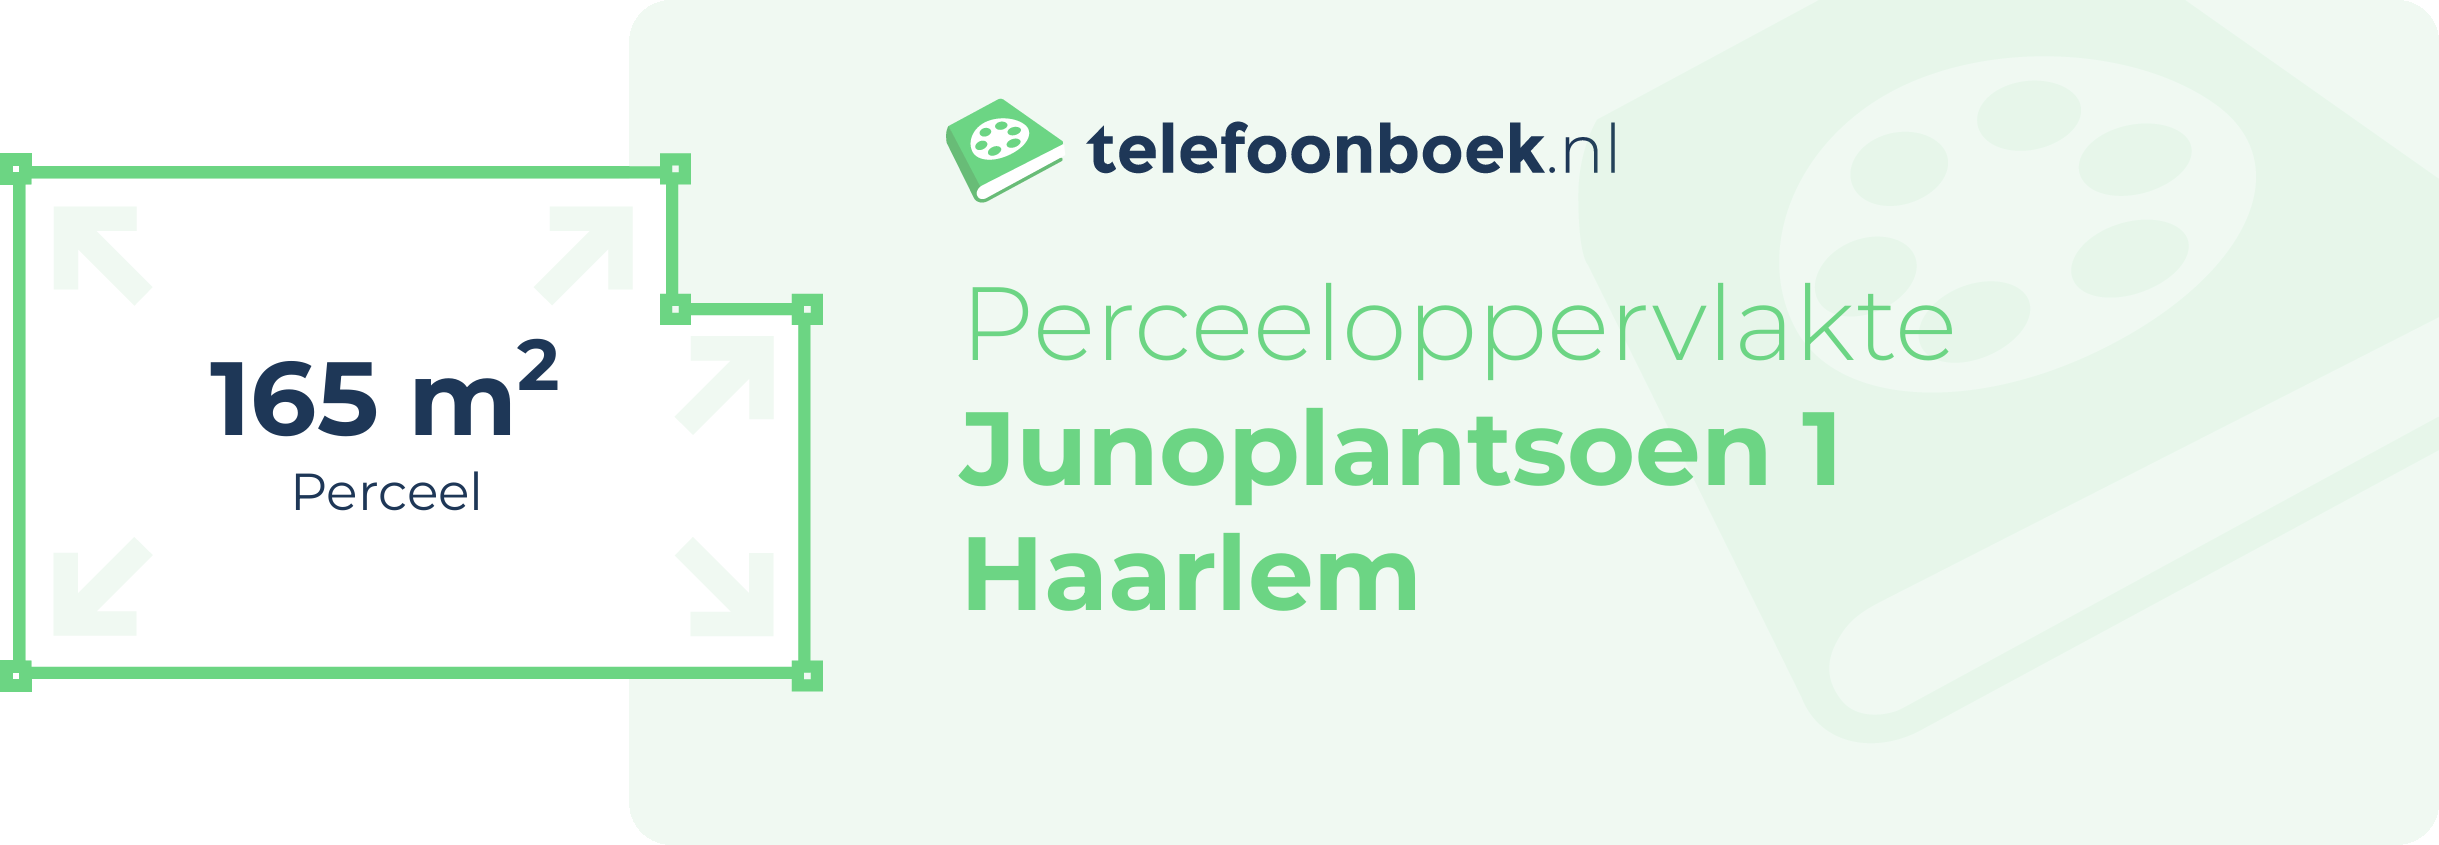 Perceeloppervlakte Junoplantsoen 1 Haarlem